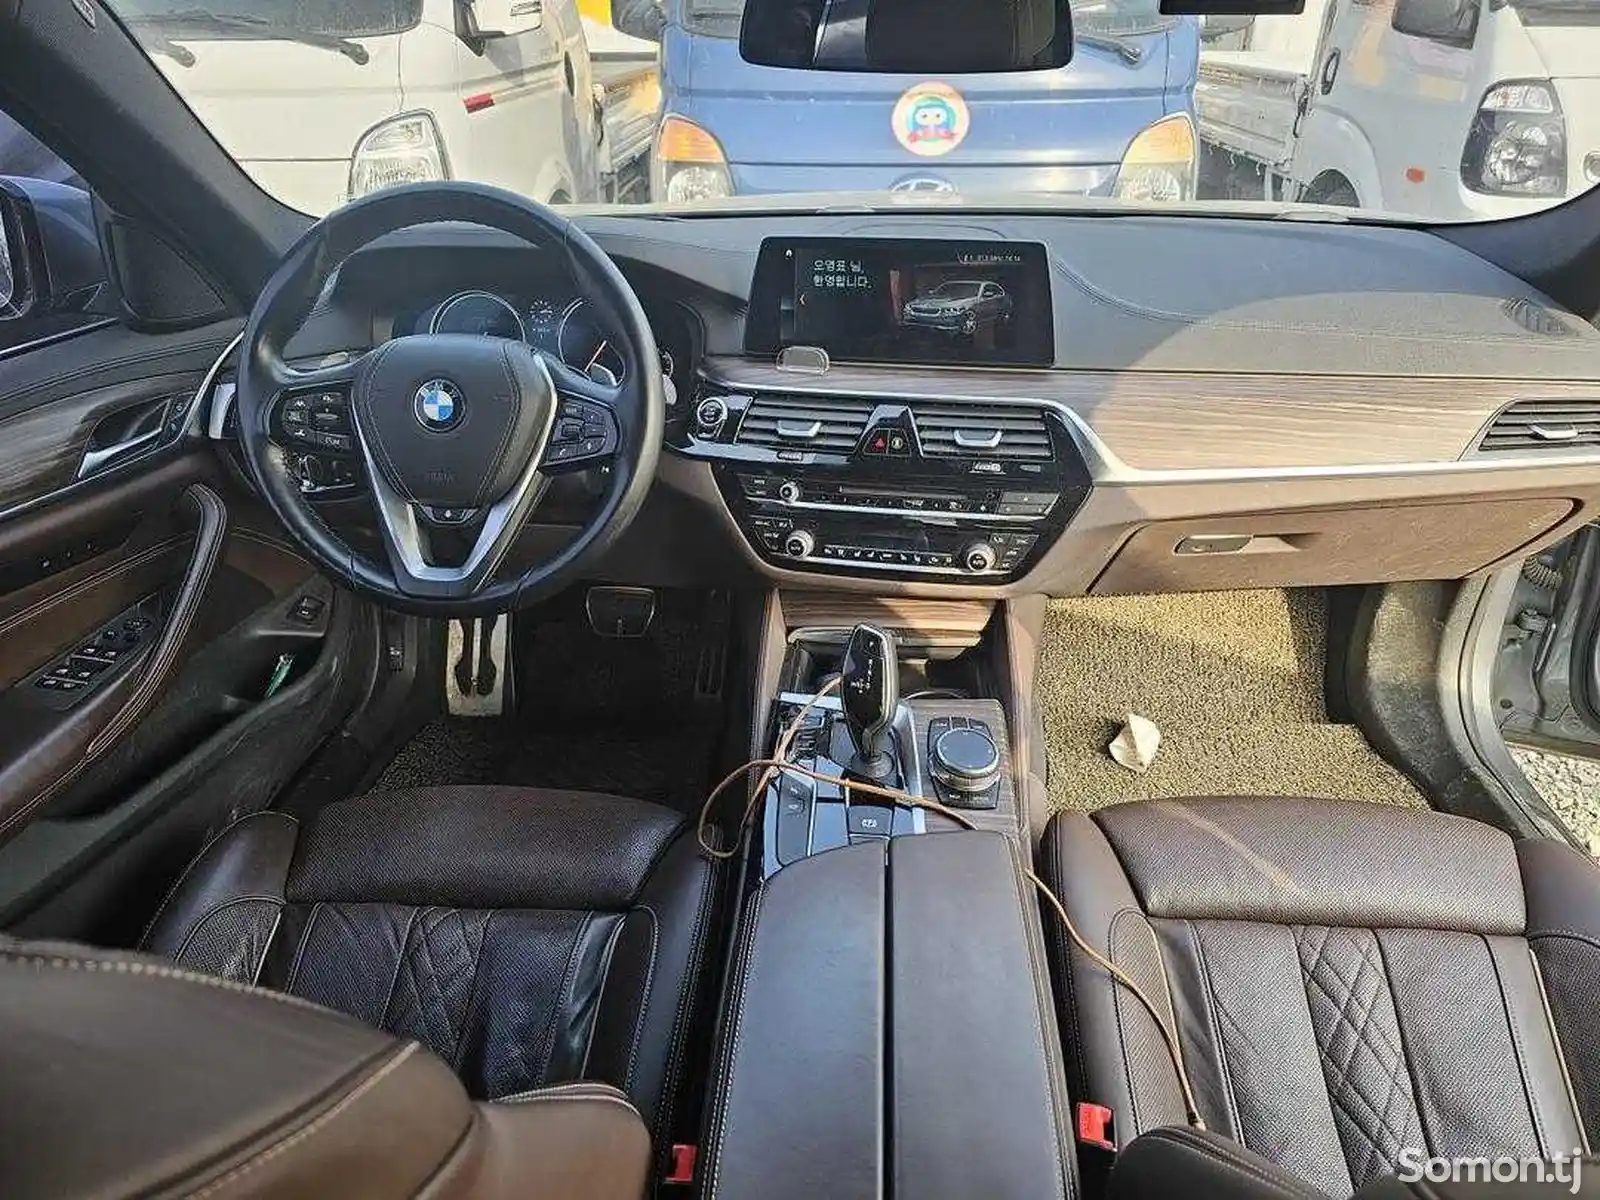 BMW 5 series, 2018-13